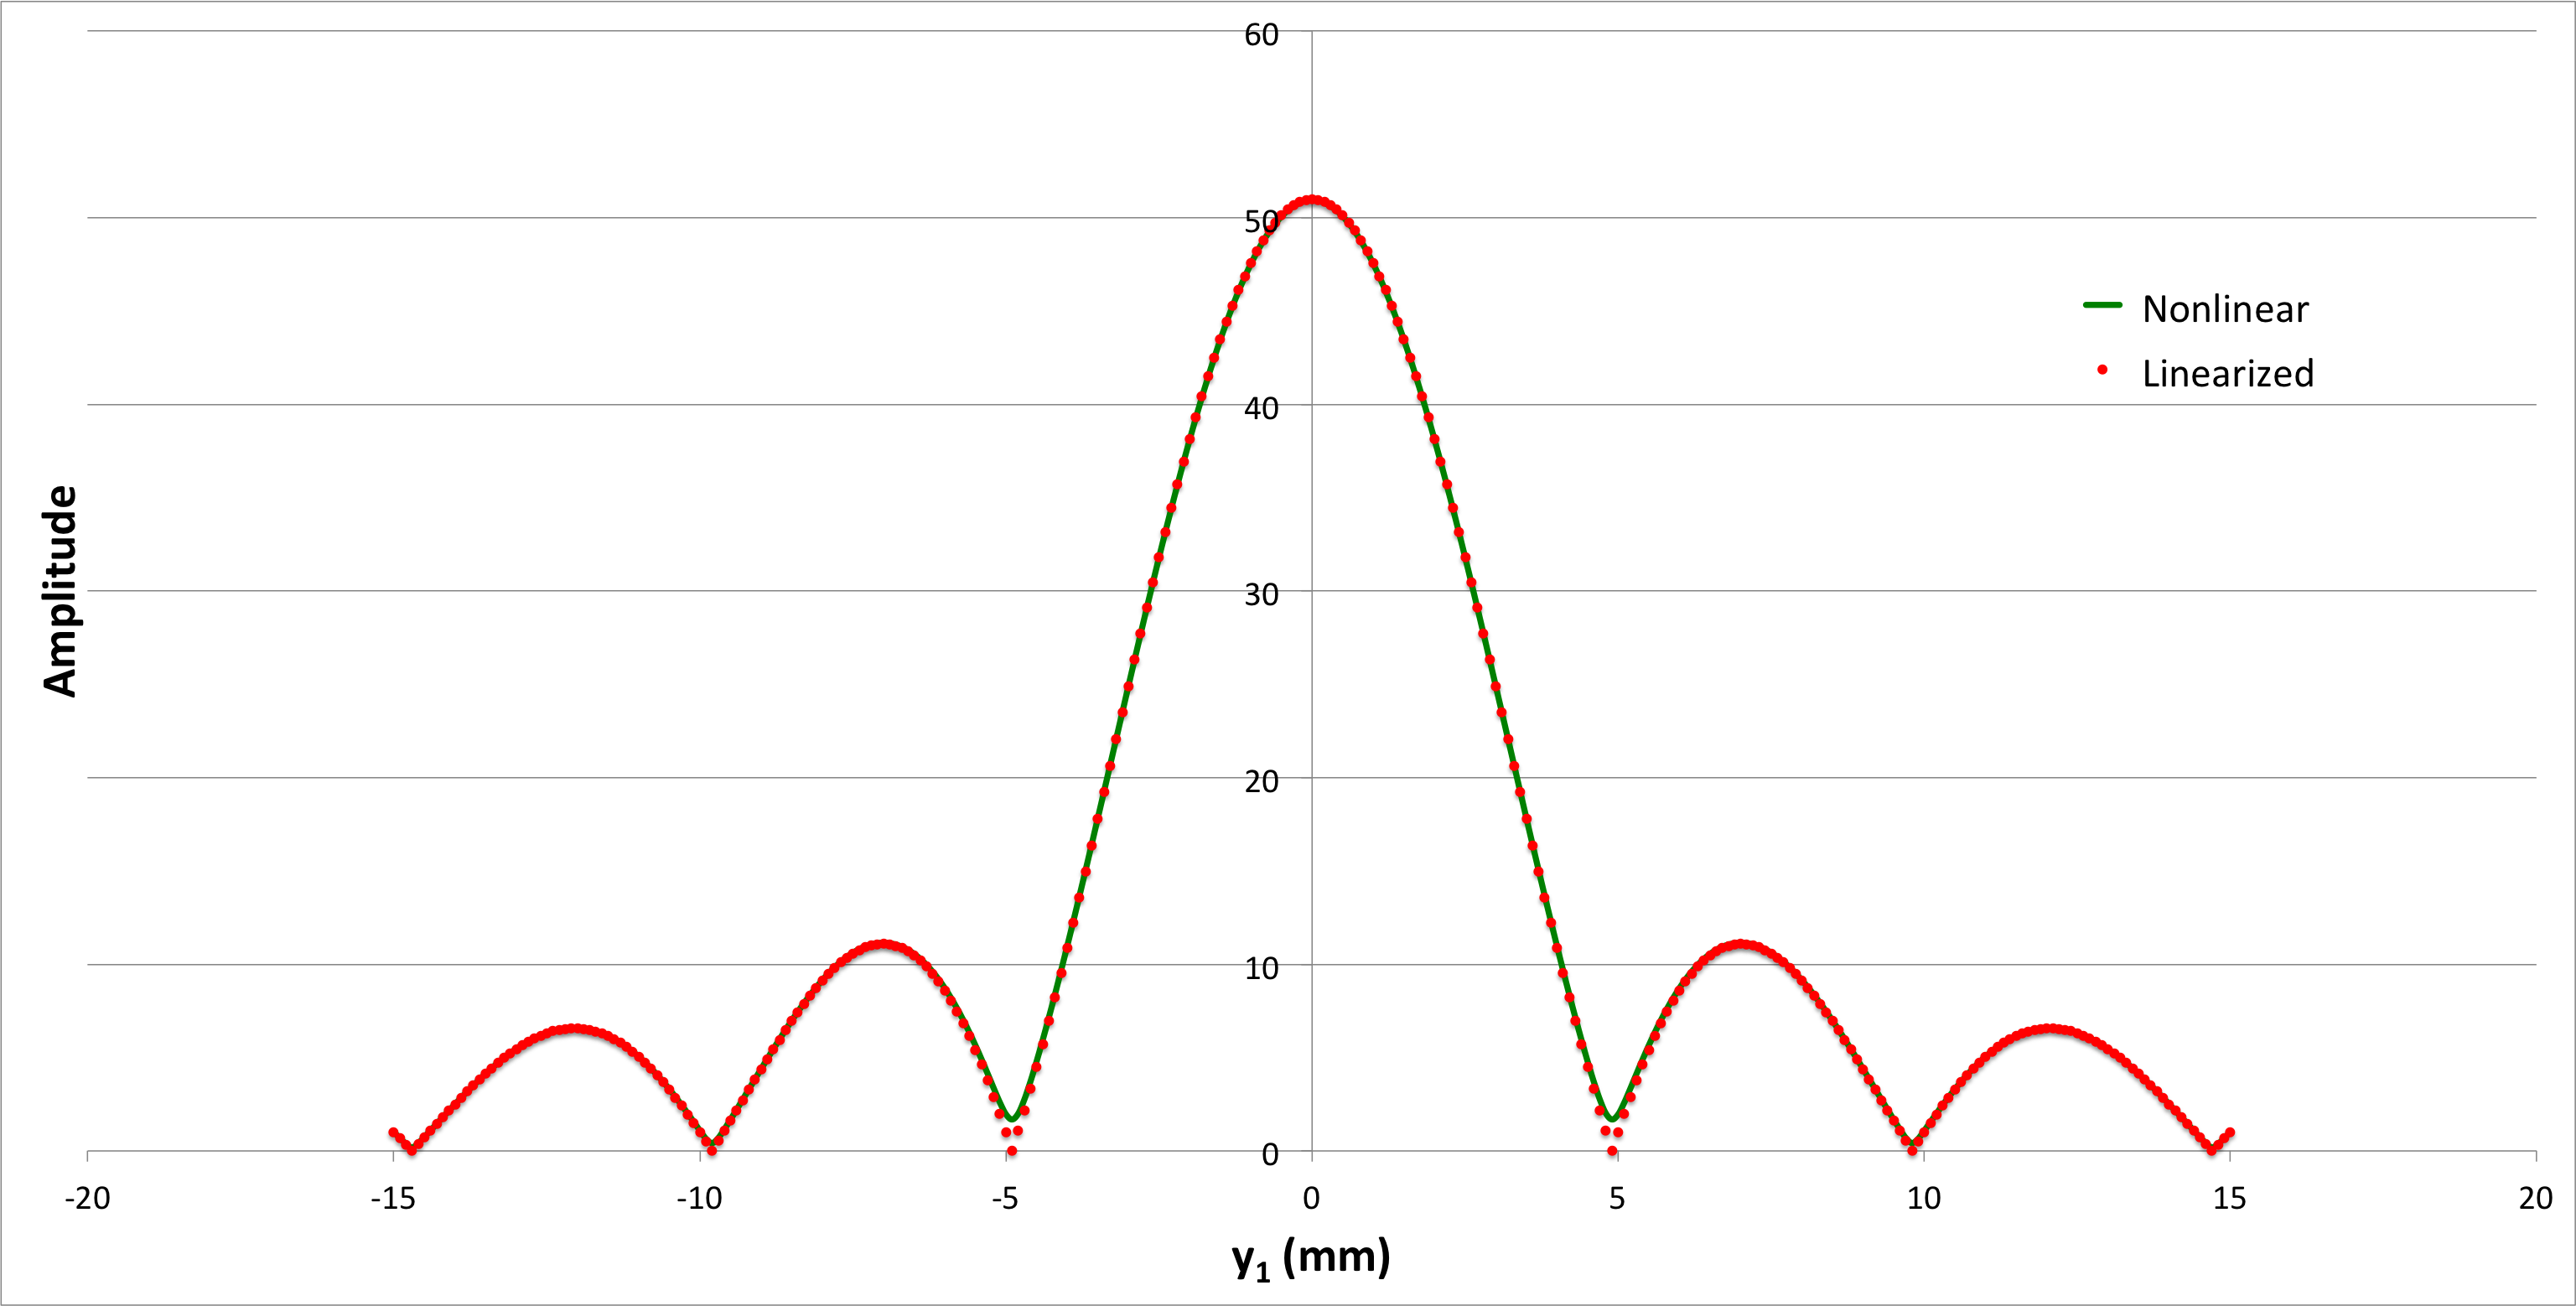 Second Plot of Single-Slit Diffraction Pattern